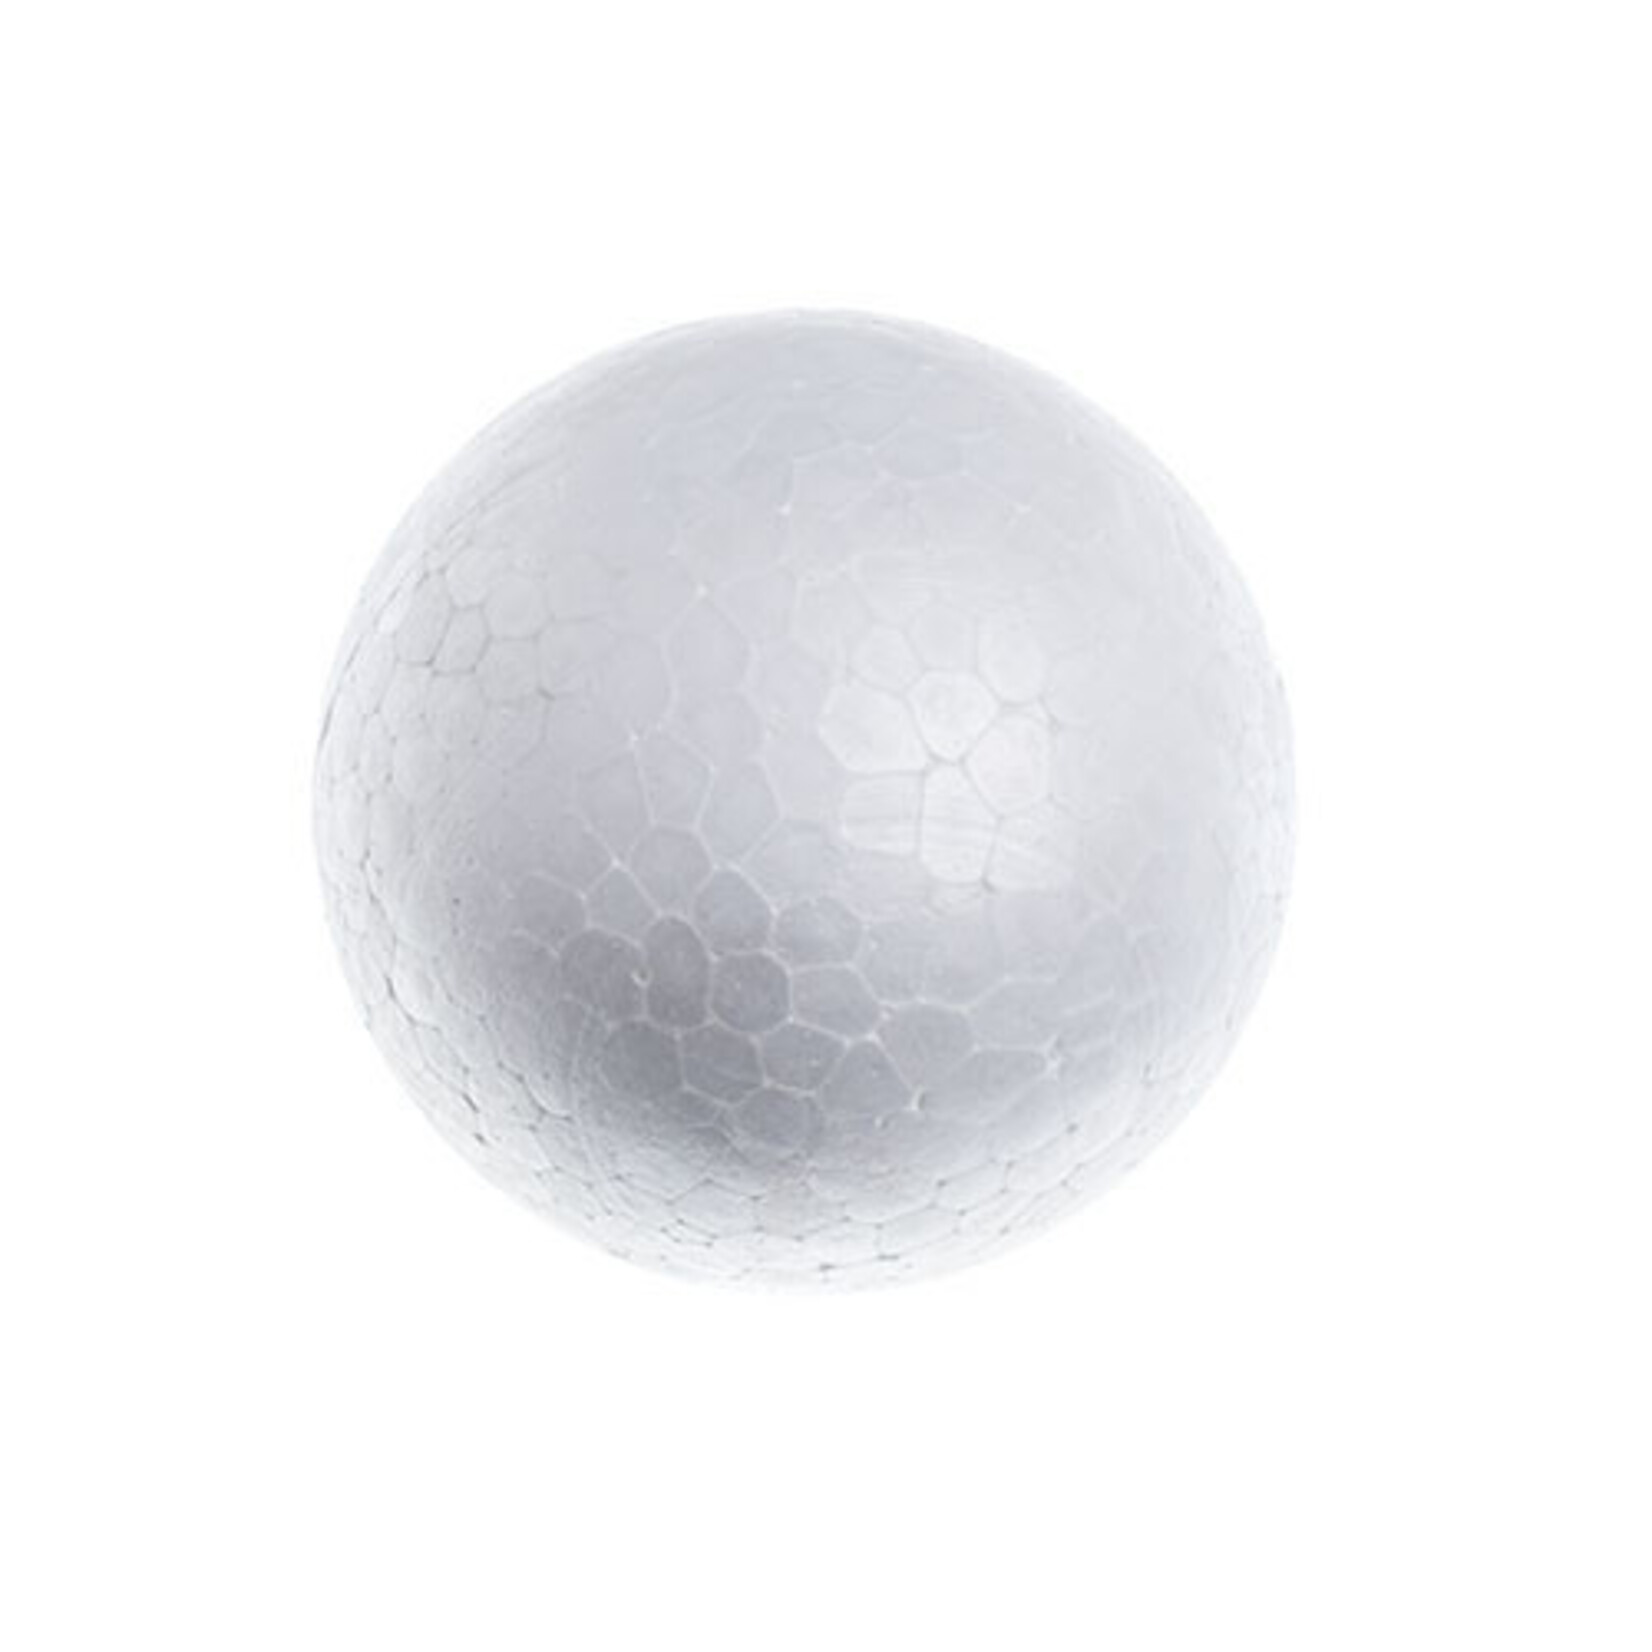 Dylite Styrofoam Ball White 4 inches Round